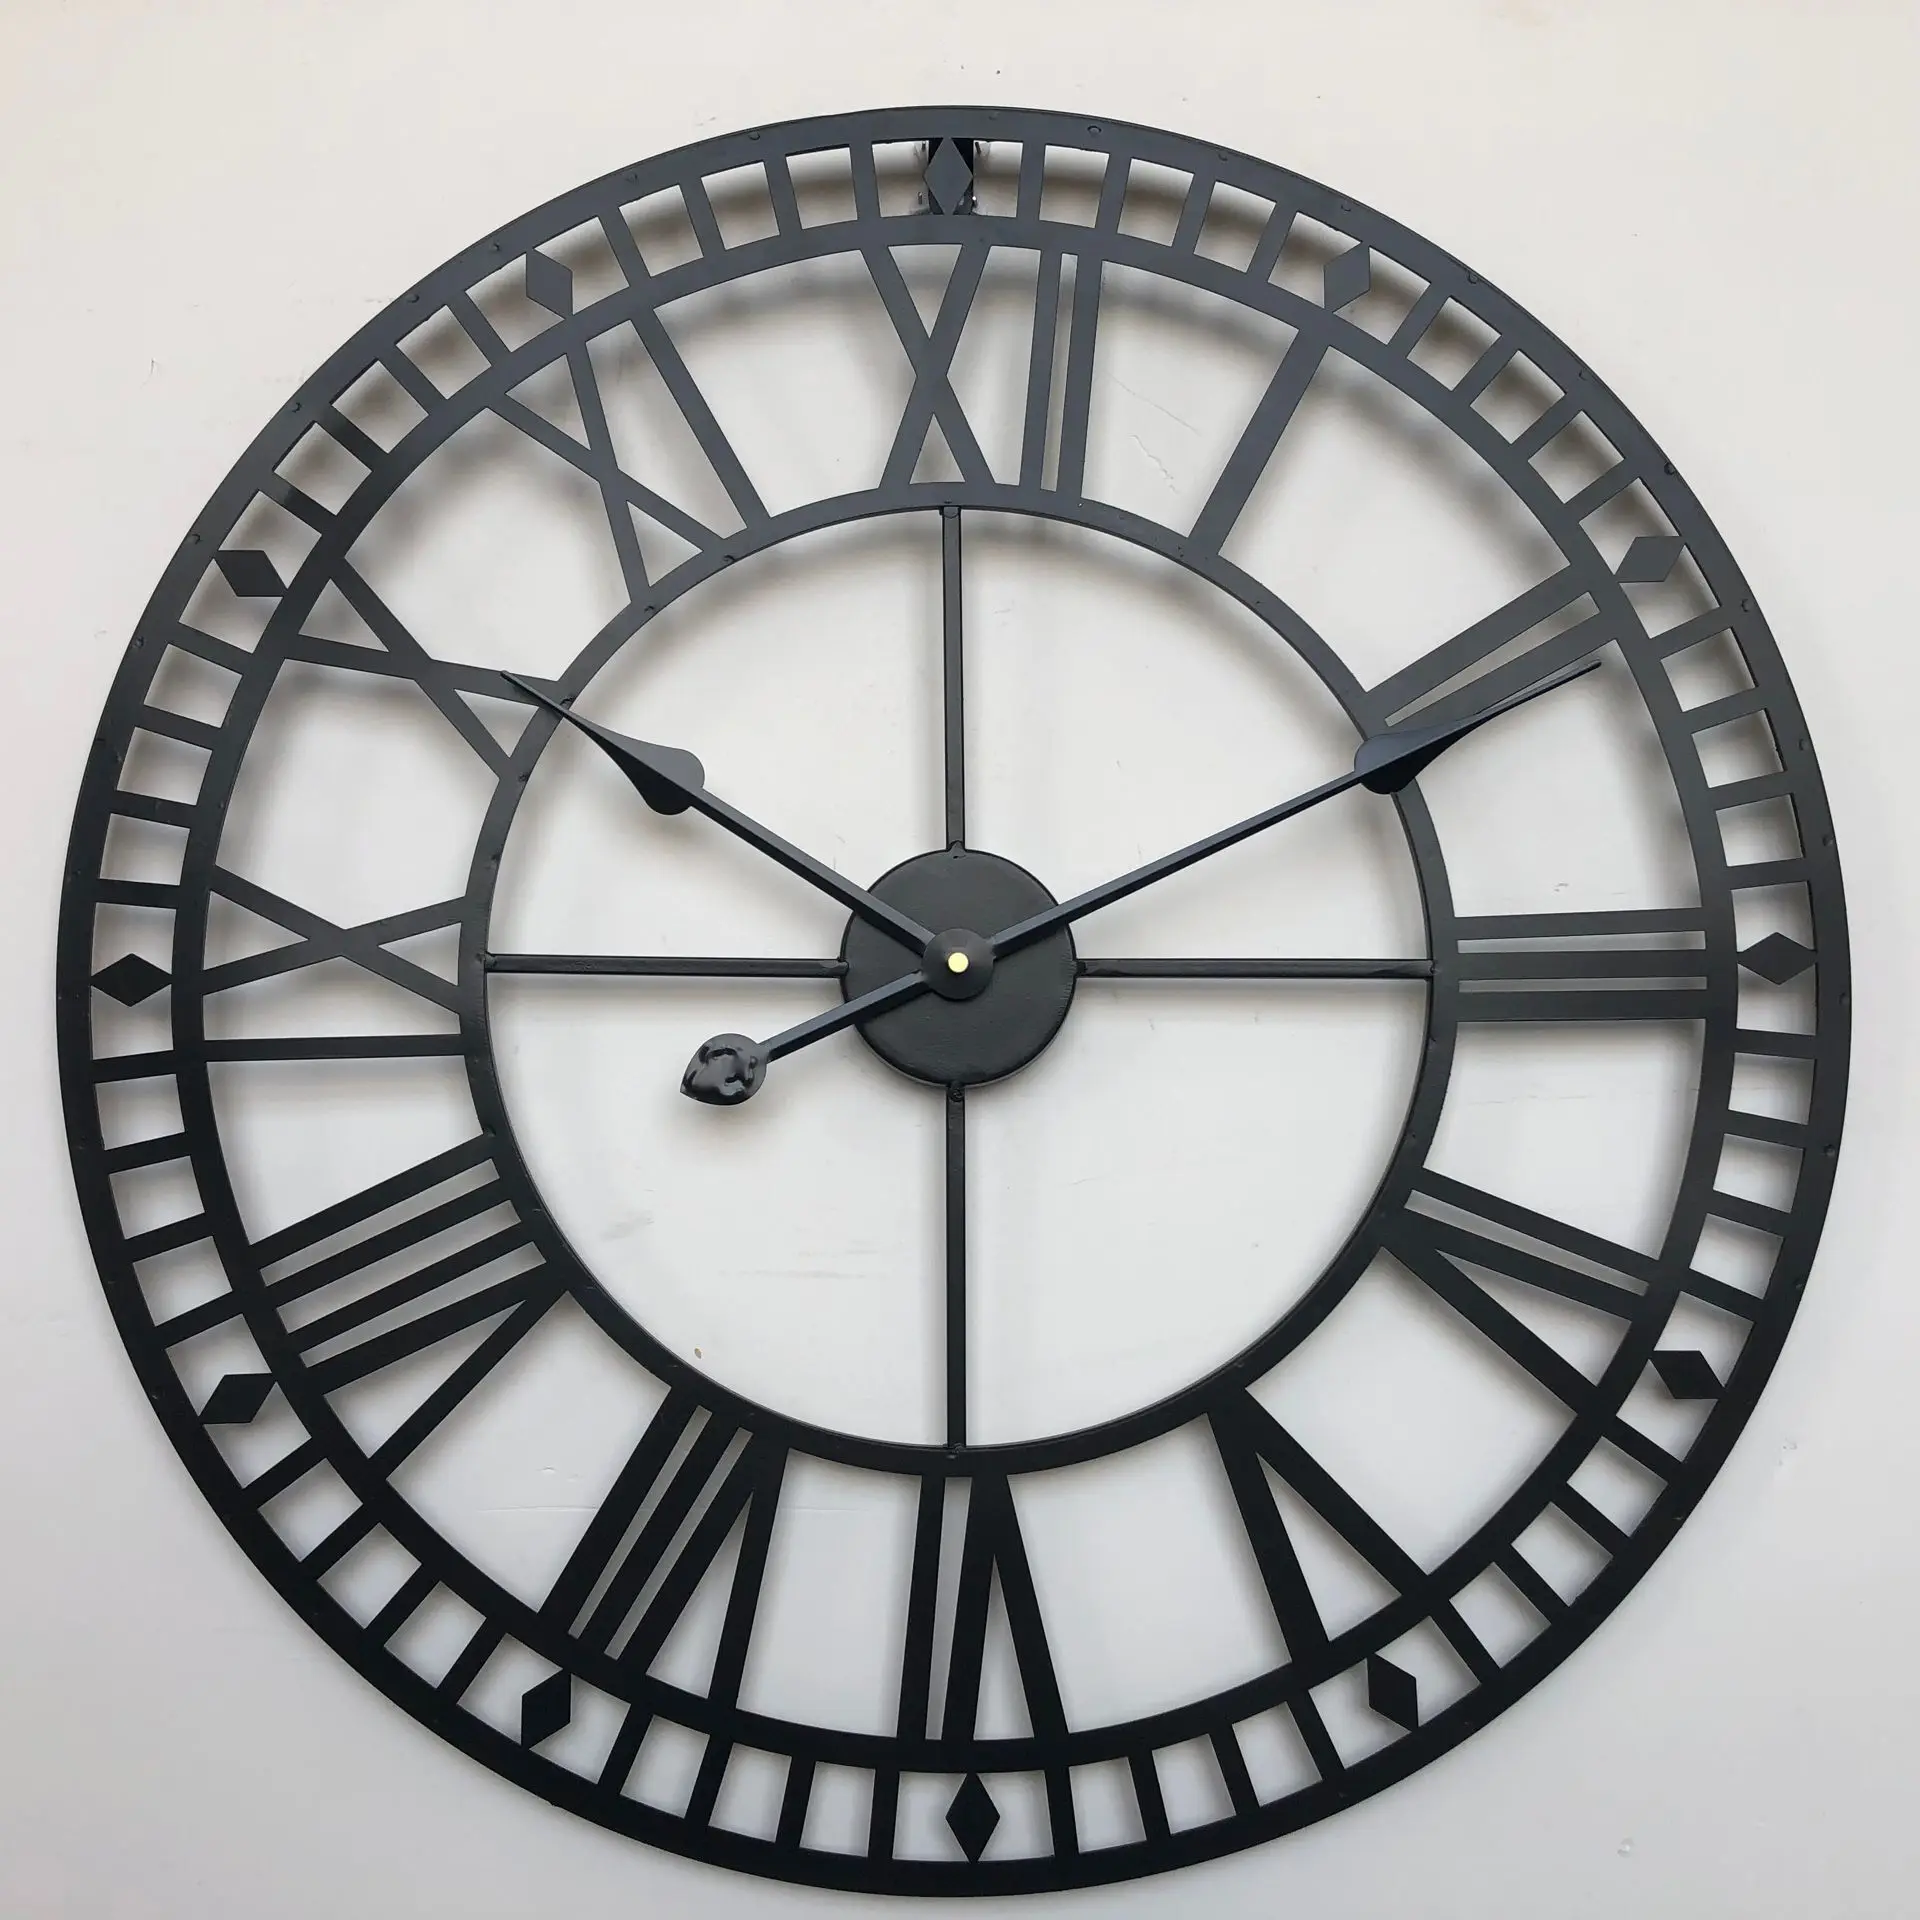 Reloj de pared de hierro forjado, diseño moderno, redondo, decorativo, silencioso, Europeo, 60cm